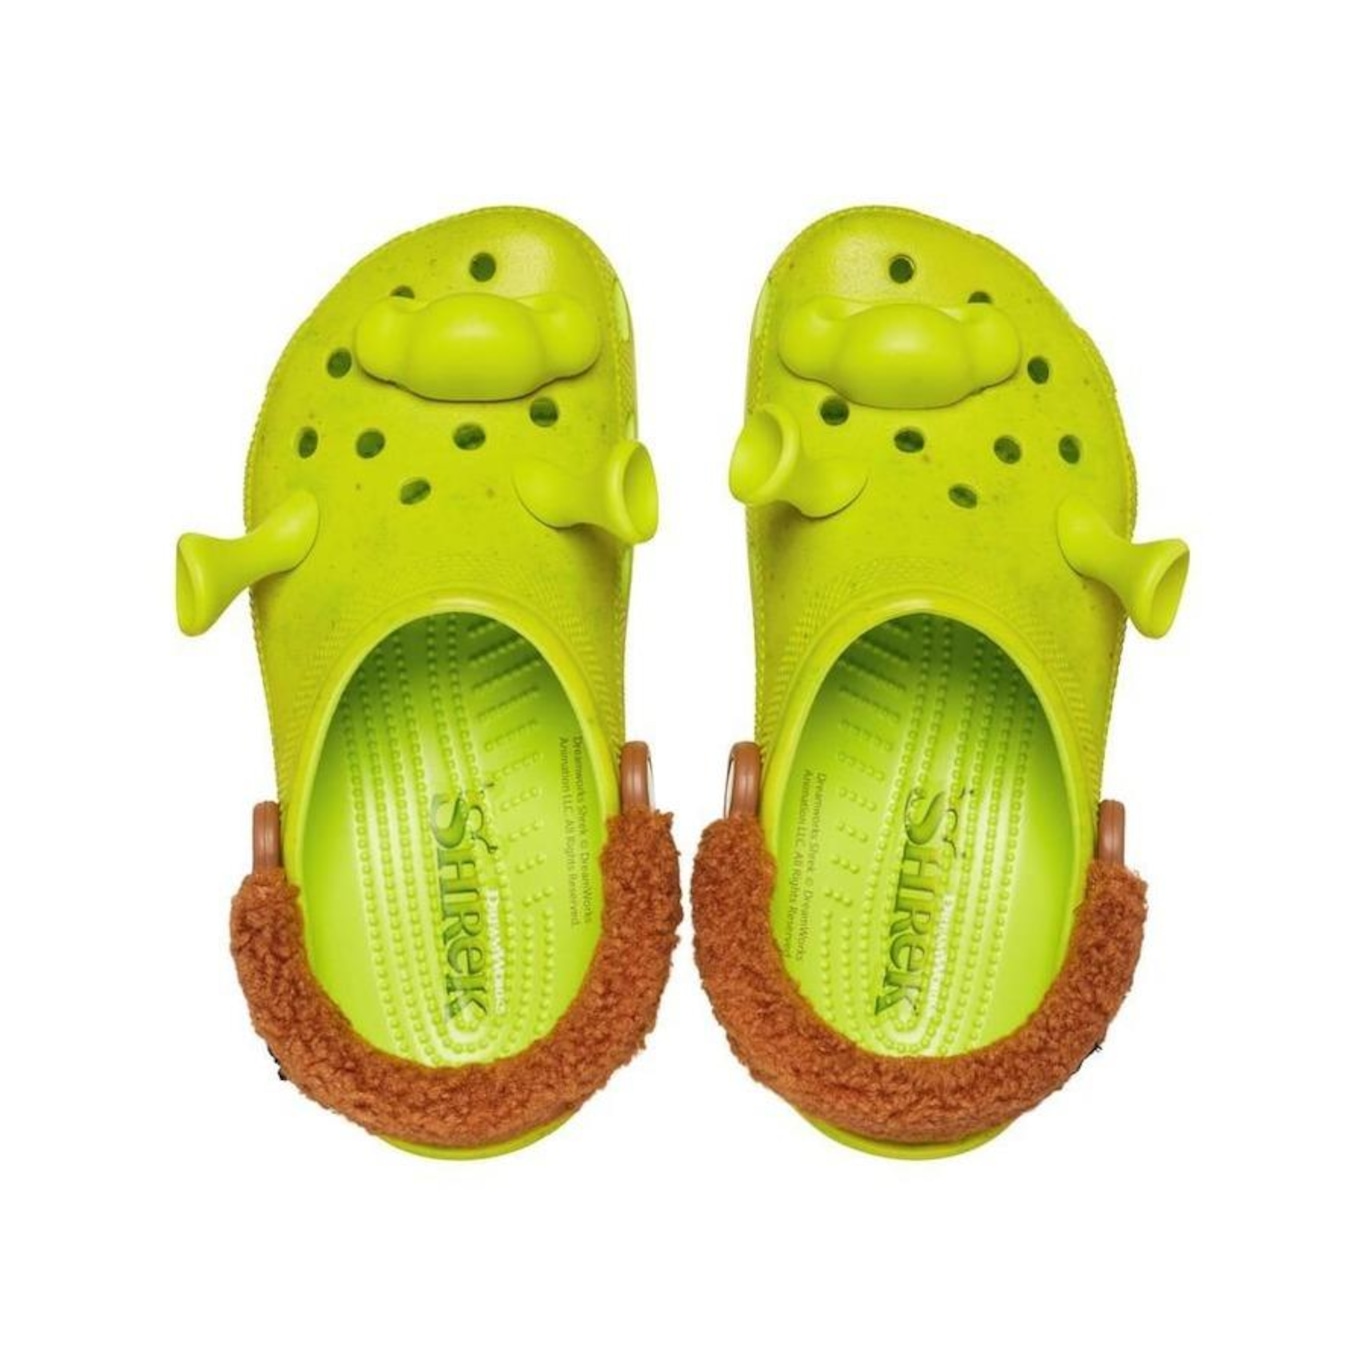  Crocs: Shrek